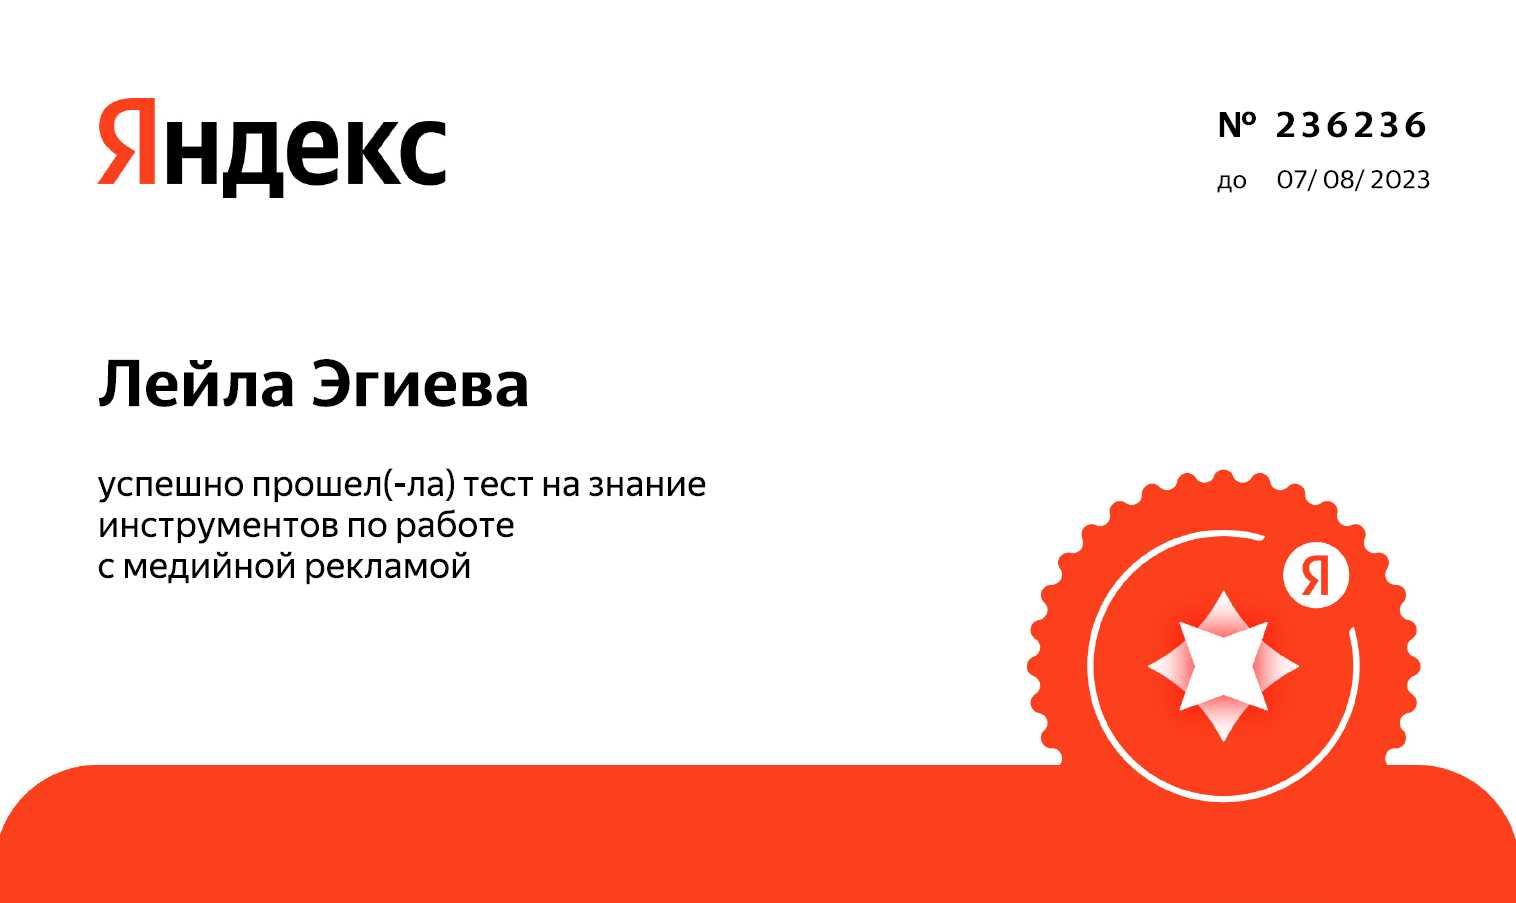 SEO - продвижение сайтов (Яндекс, Google)